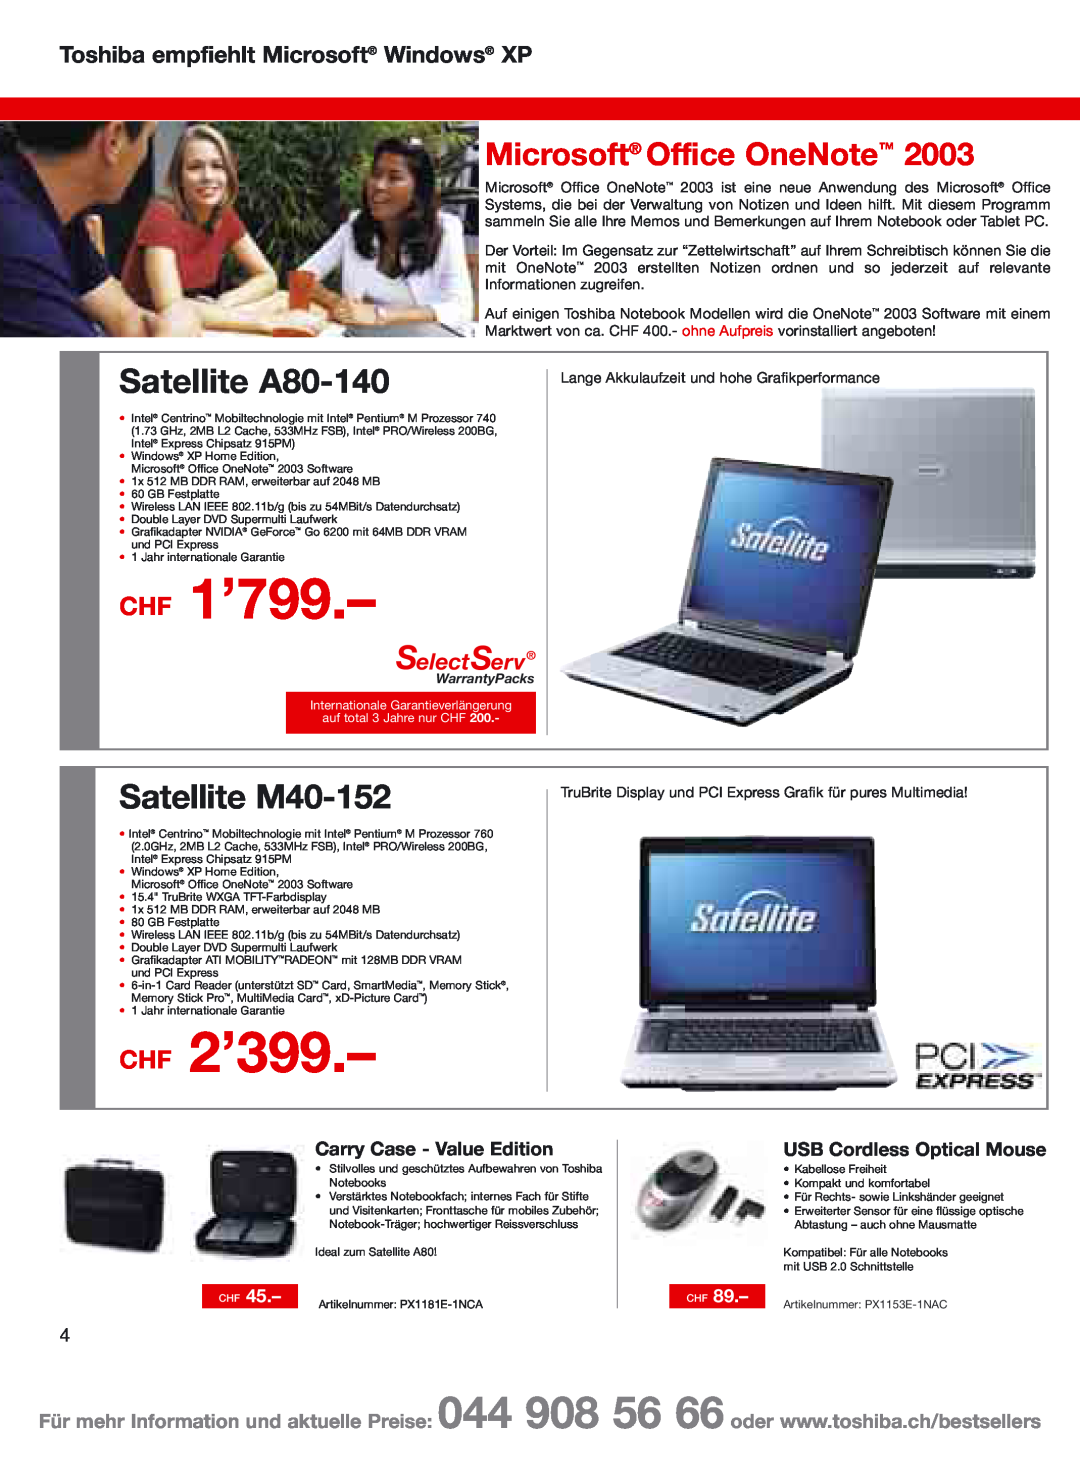 Toshiba Portg R200 manual CHF 1’799, CHF 2’399, Satellite A80-140, Satellite M40-152, Microsoft Office OneNote, SelectServ 